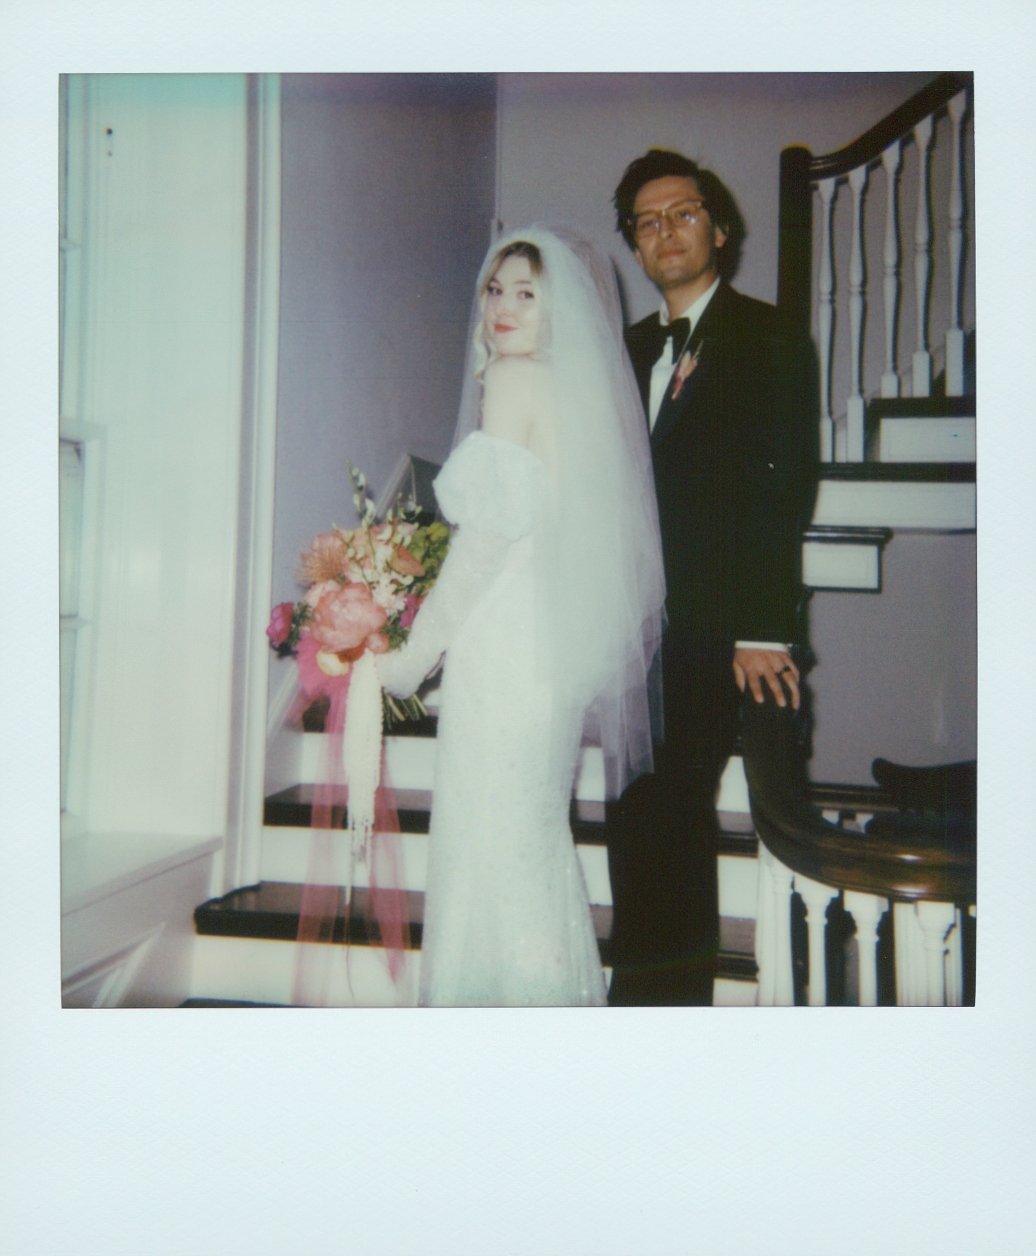 Wedding-taken-on-polaroids28.jpg